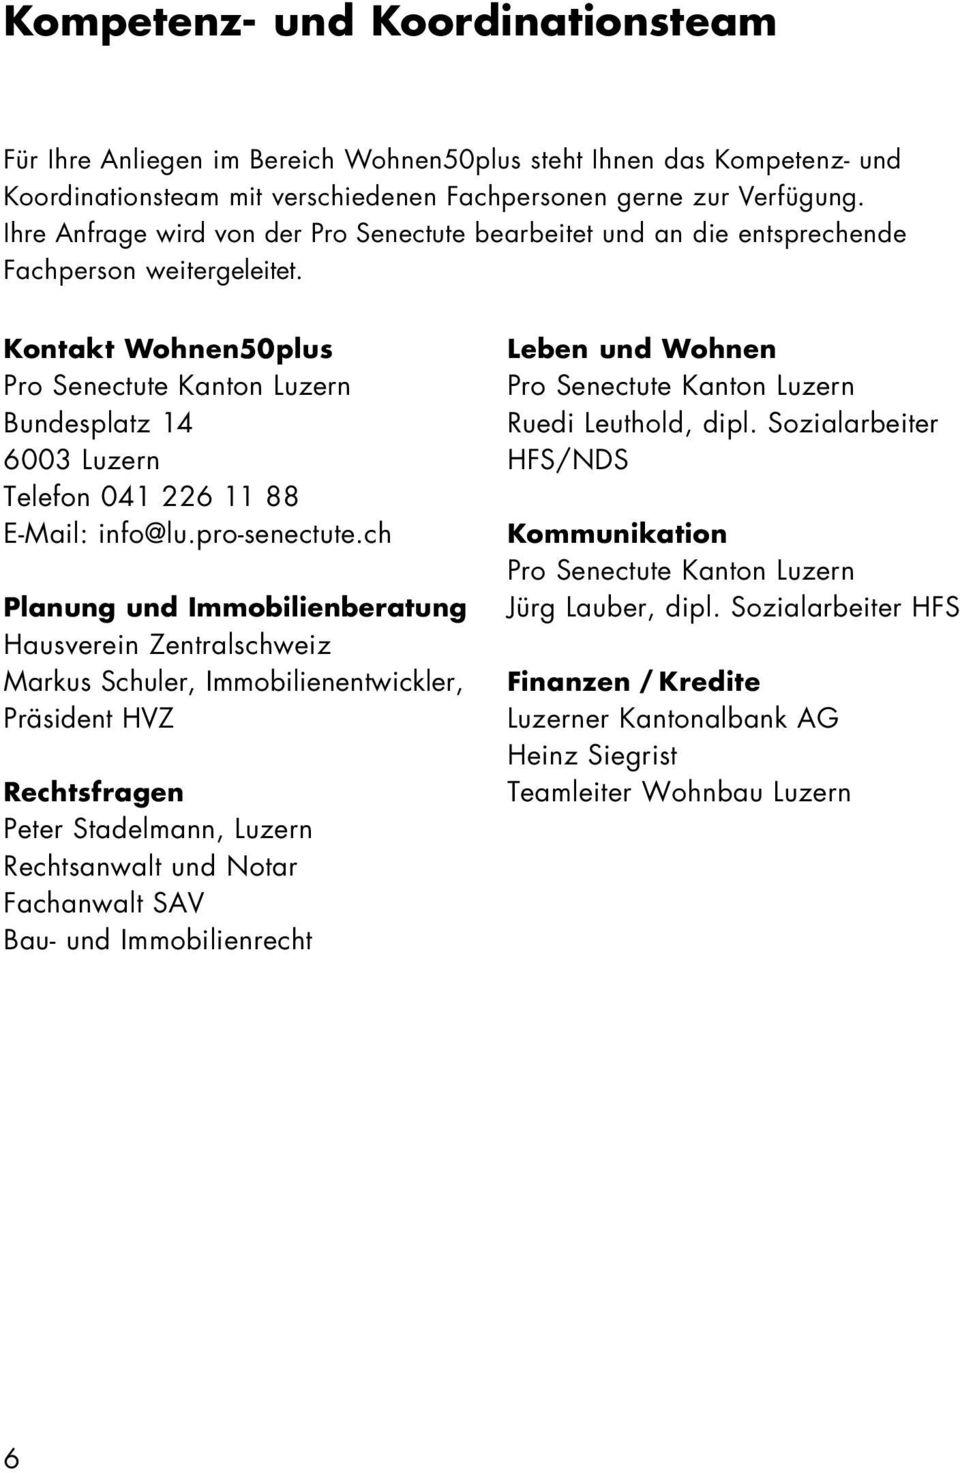 Kontakt Wohnen50plus Pro Senectute Kanton Luzern Bundesplatz 14 6003 Luzern Telefon 041 226 11 88 E-Mail: info@lu.pro-senectute.